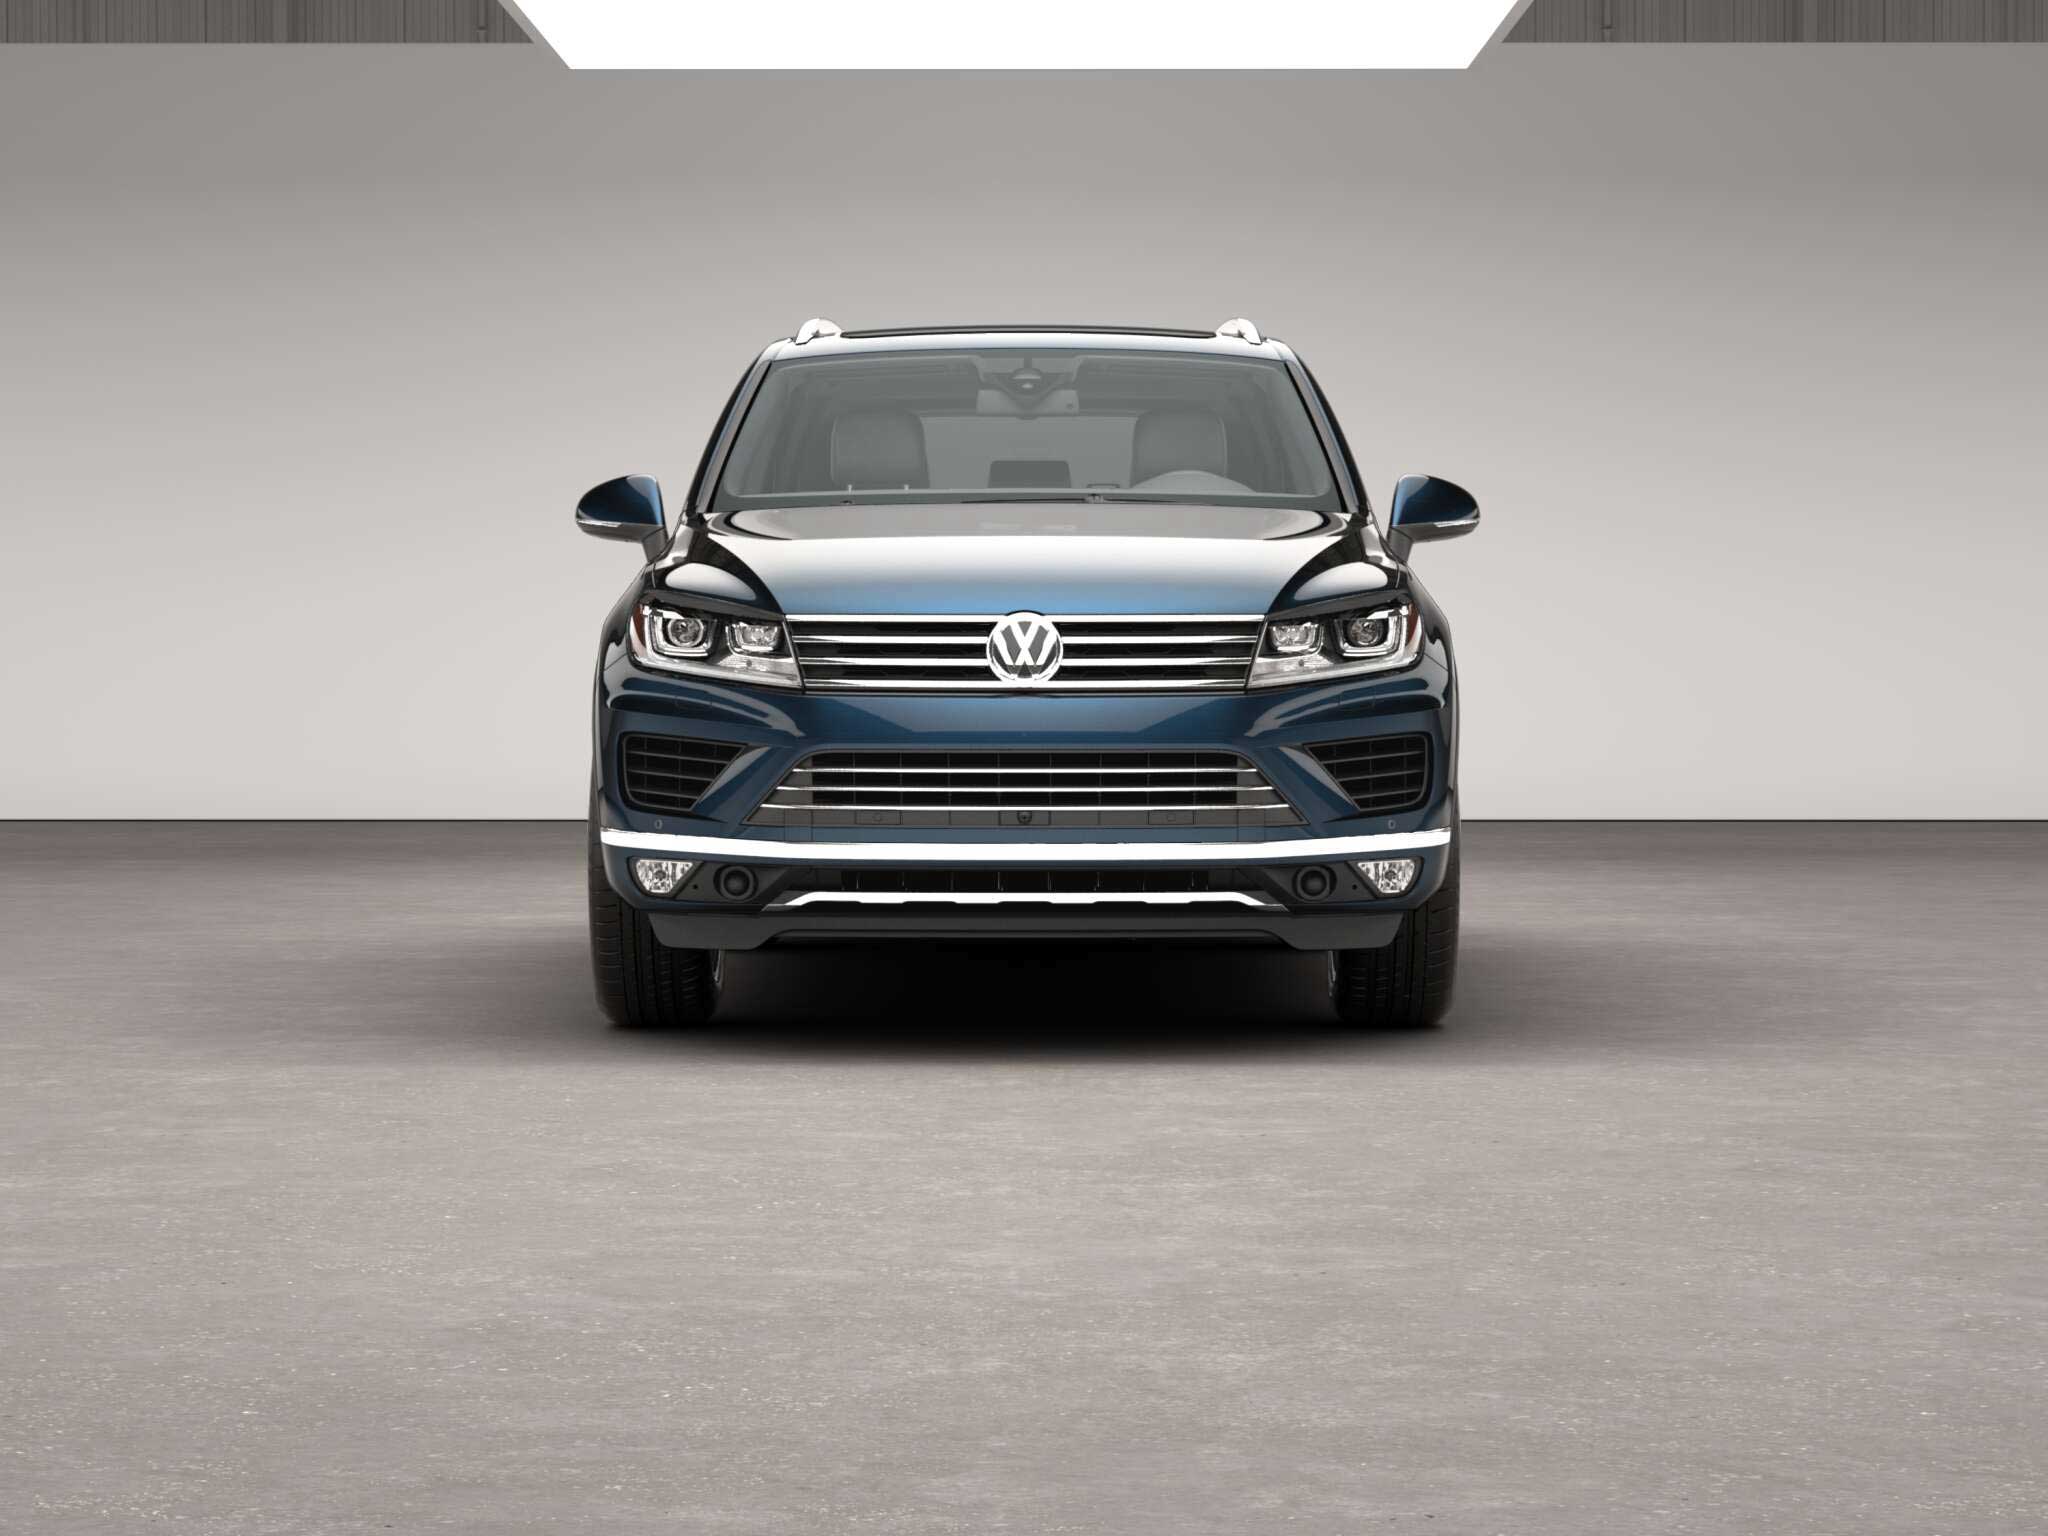 Volkswagen Touareg V6 Lux Exterior front view